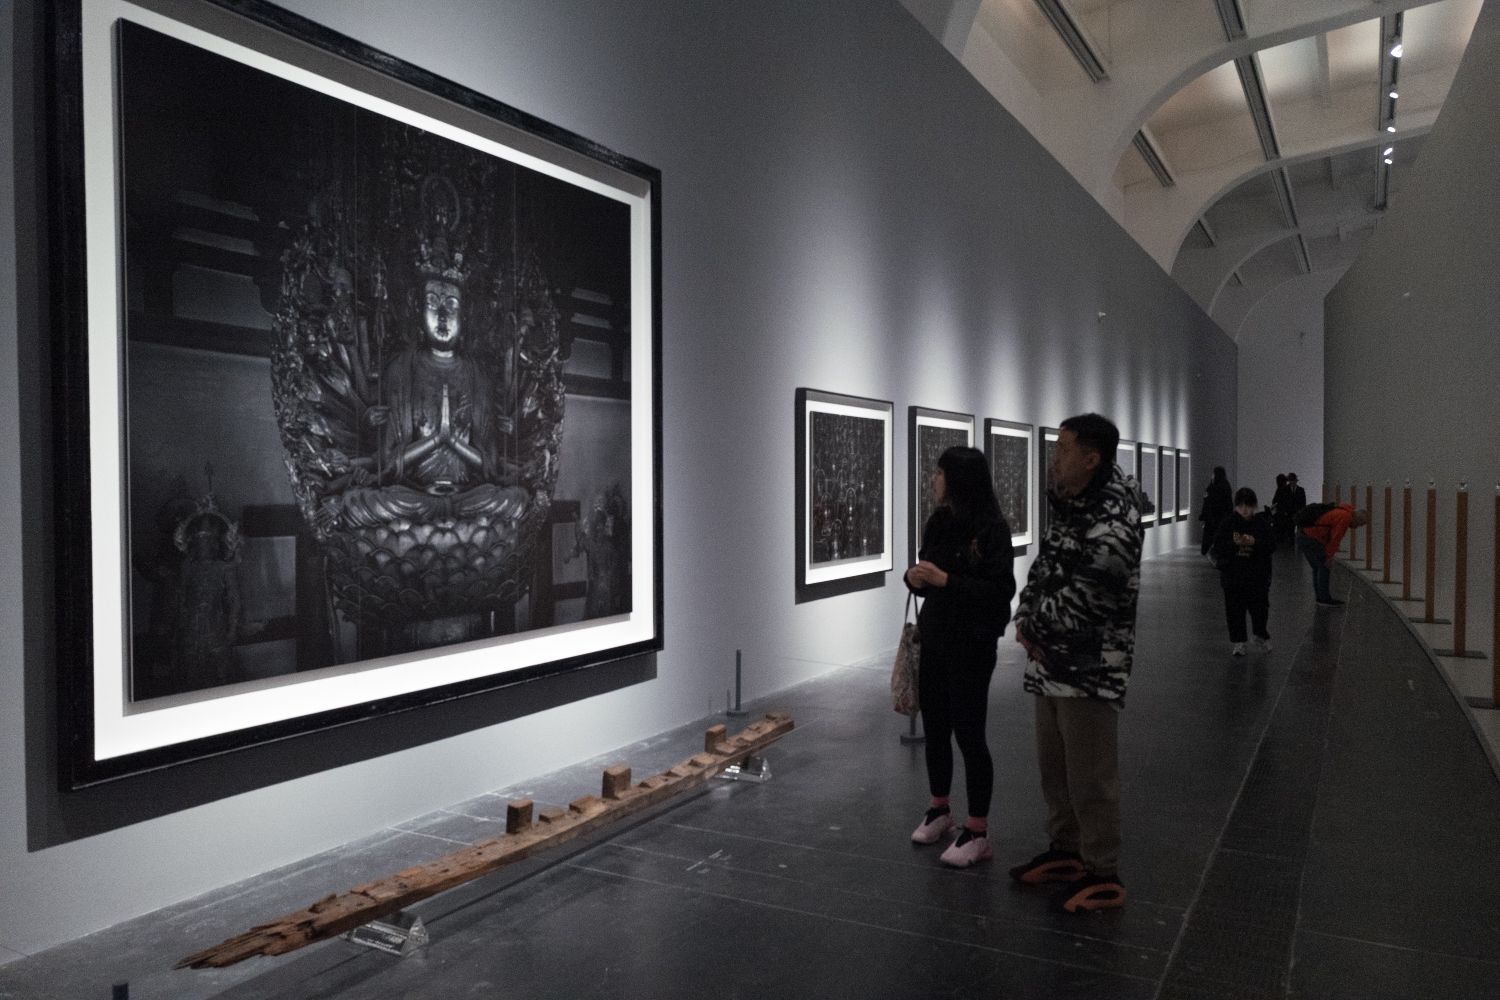 Visitors appreciate works of Japanese artist Hiroshi Sugimoto's 